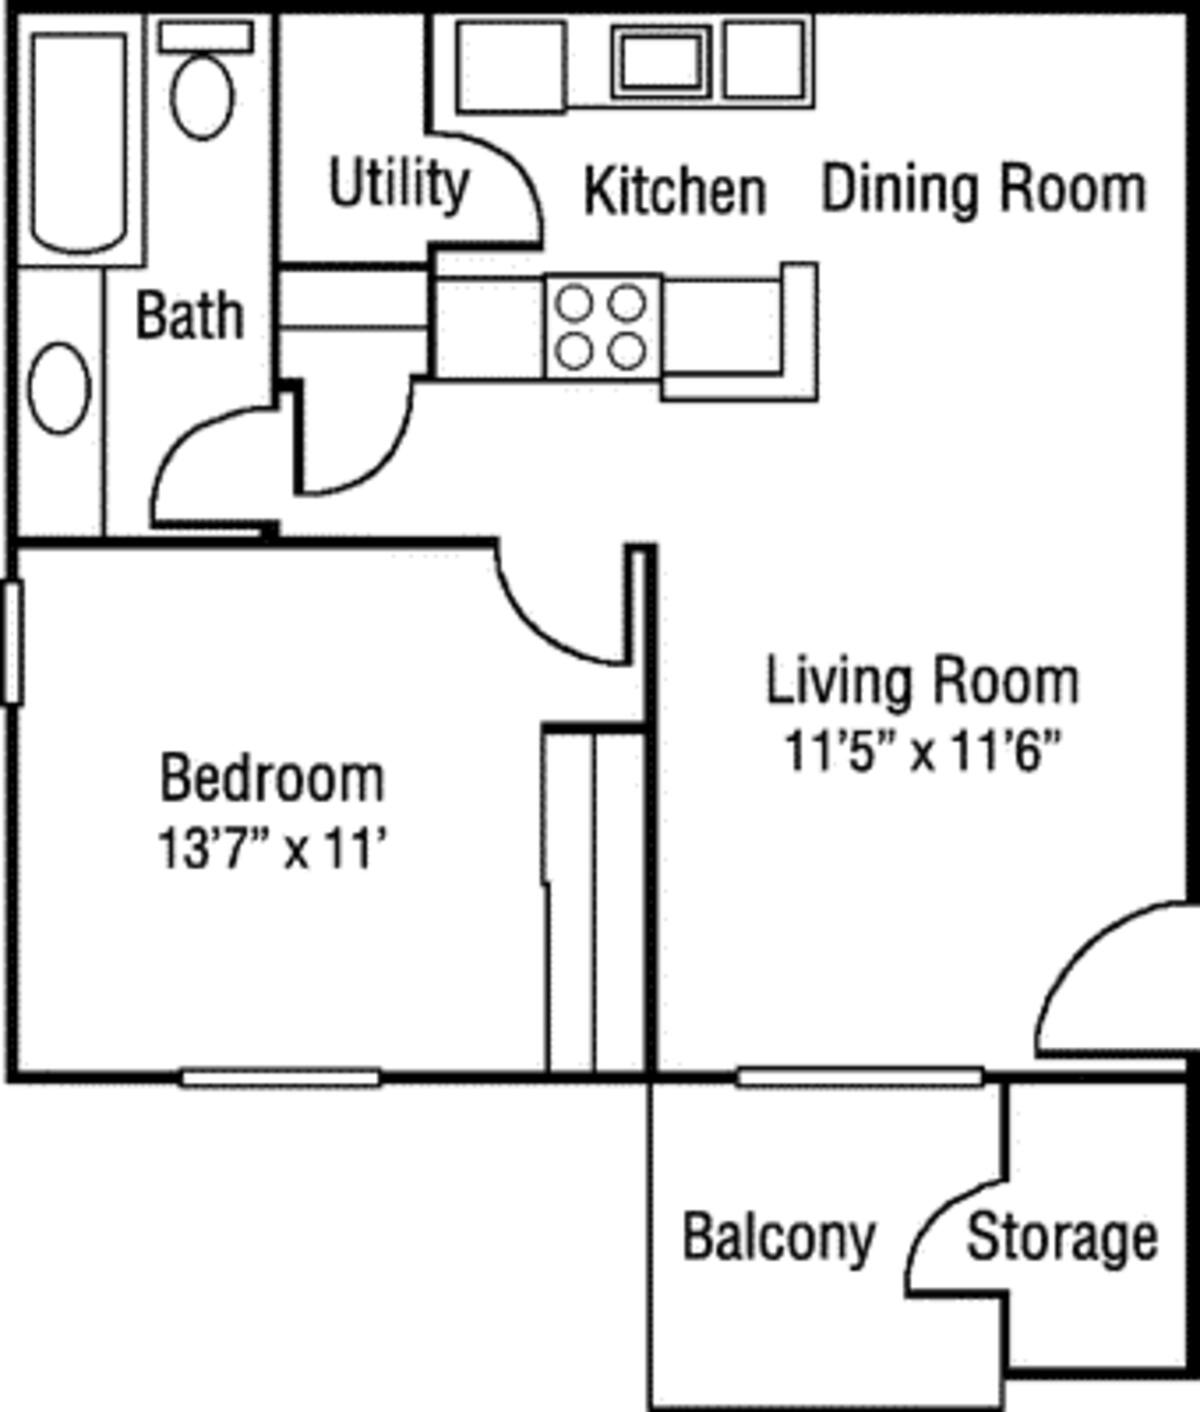 Floorplan diagram for The Redwood, showing 1 bedroom